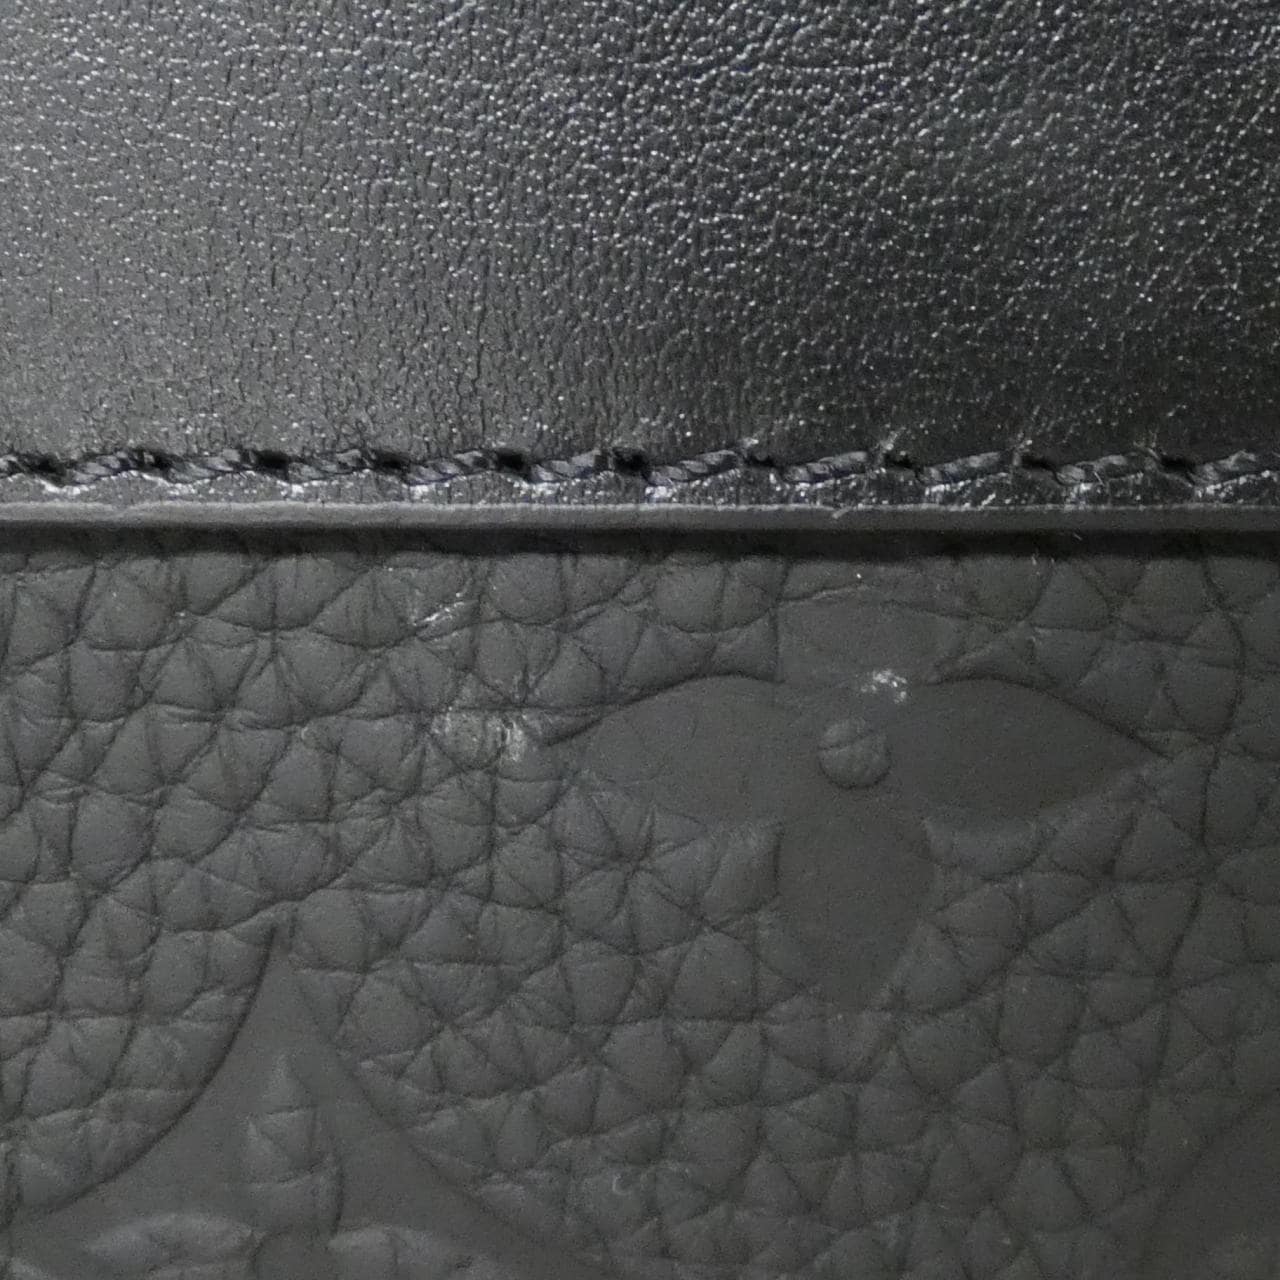 LOUIS VUITTON Vuitton Monogram Keepall Bandouliere 50cm M59025 Boston Bag